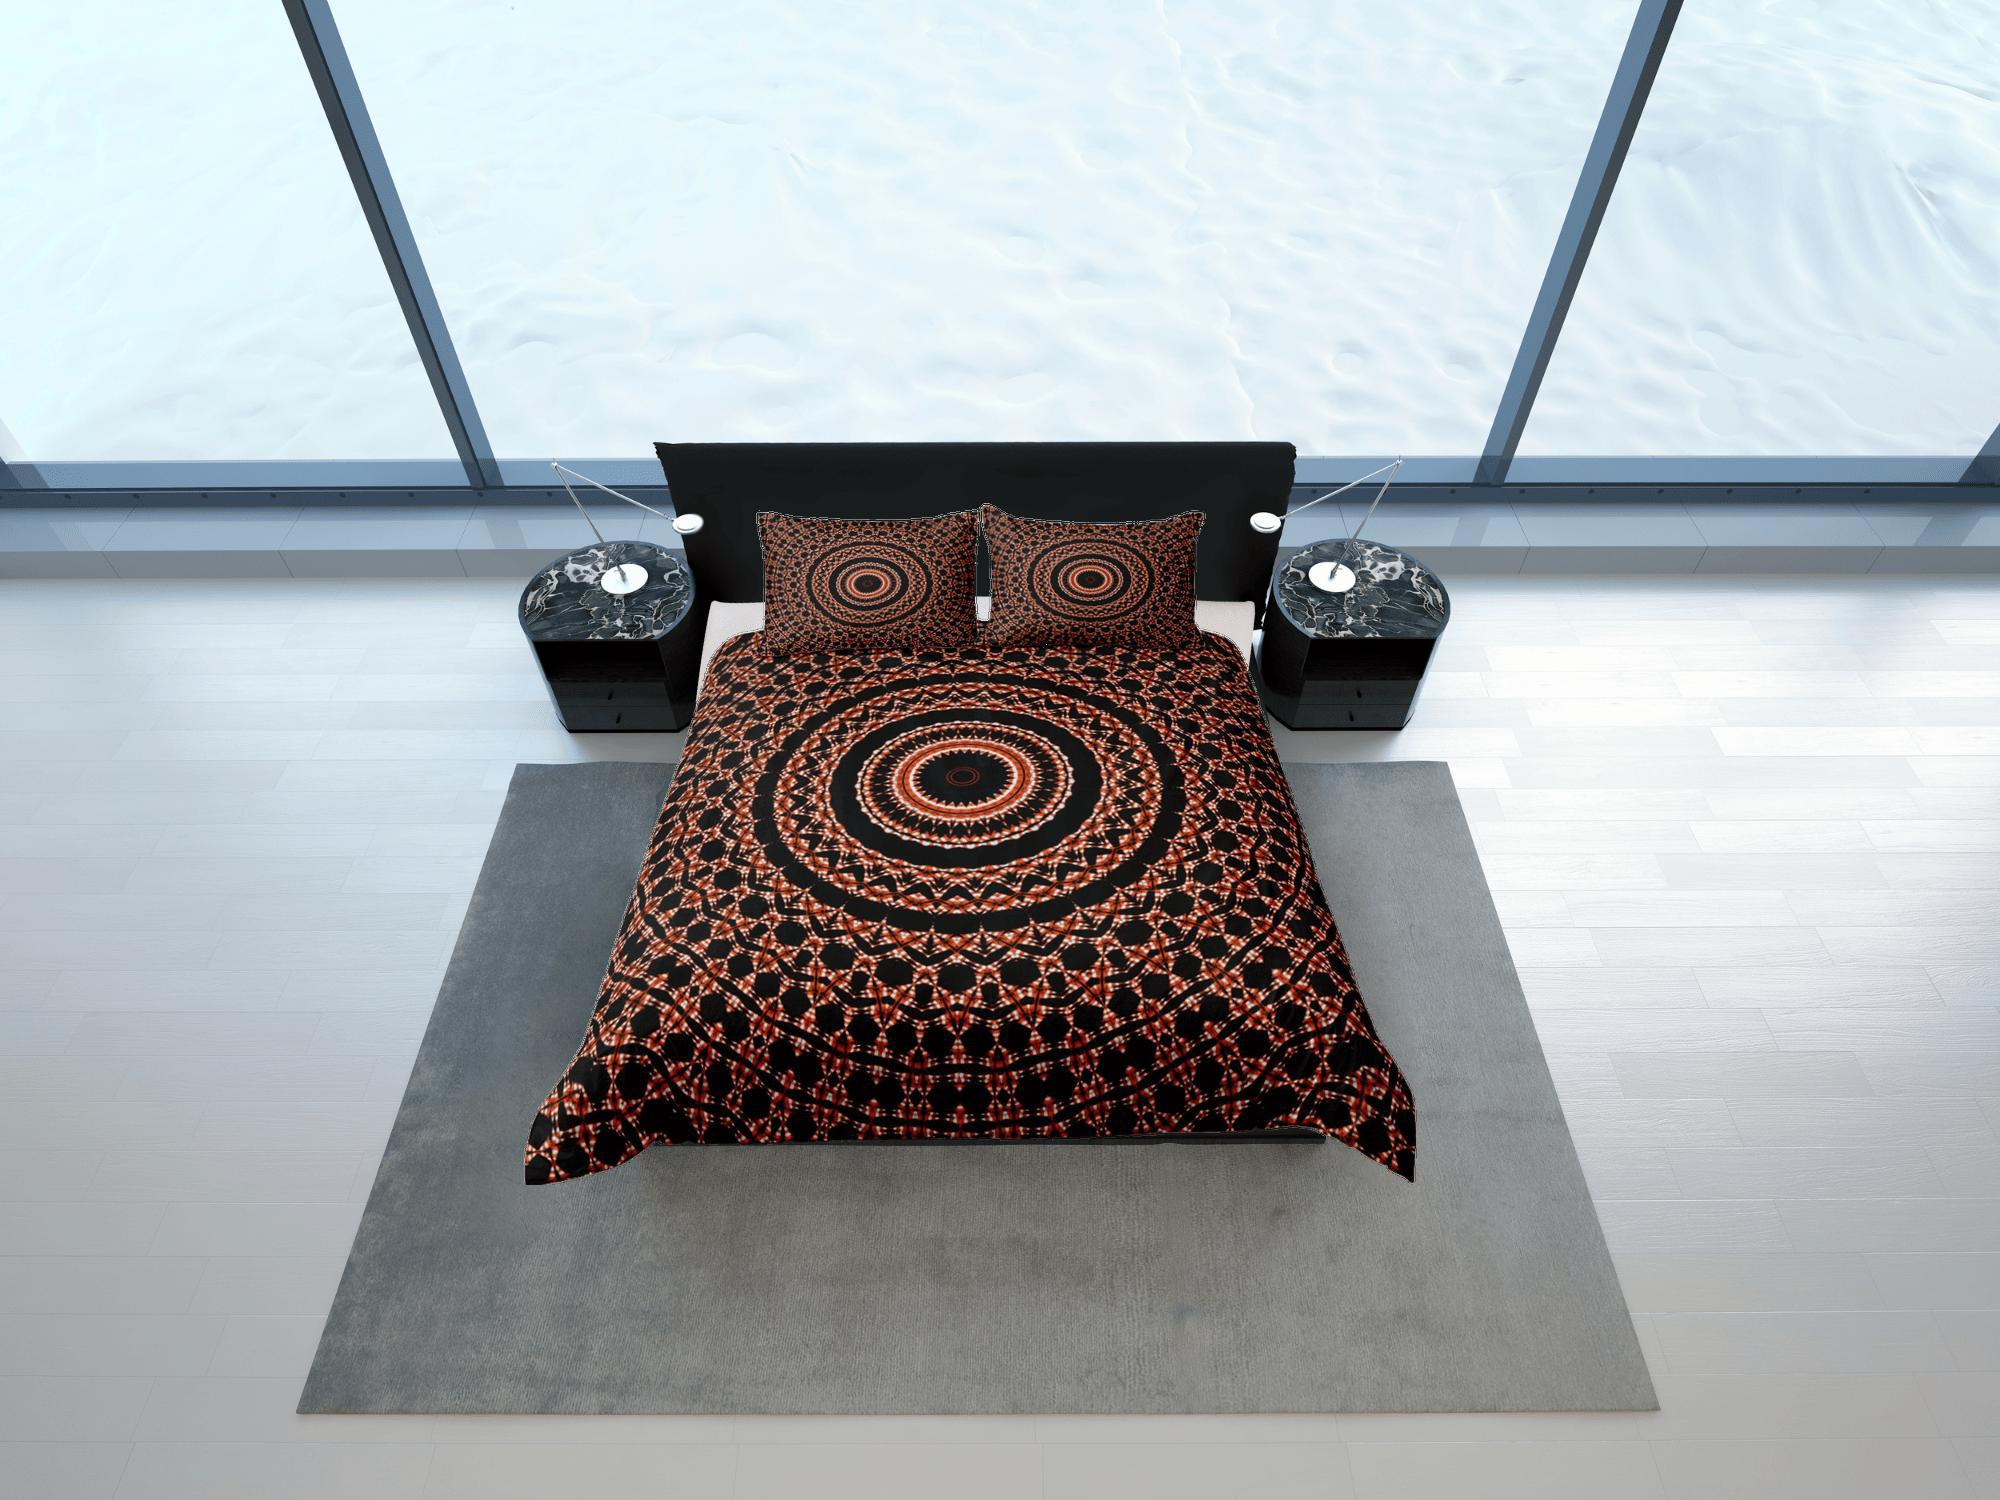 daintyduvet Mandala Bohemian Duvet Cover Set Black Bedspread, Dorm Bedding with Pillowcase